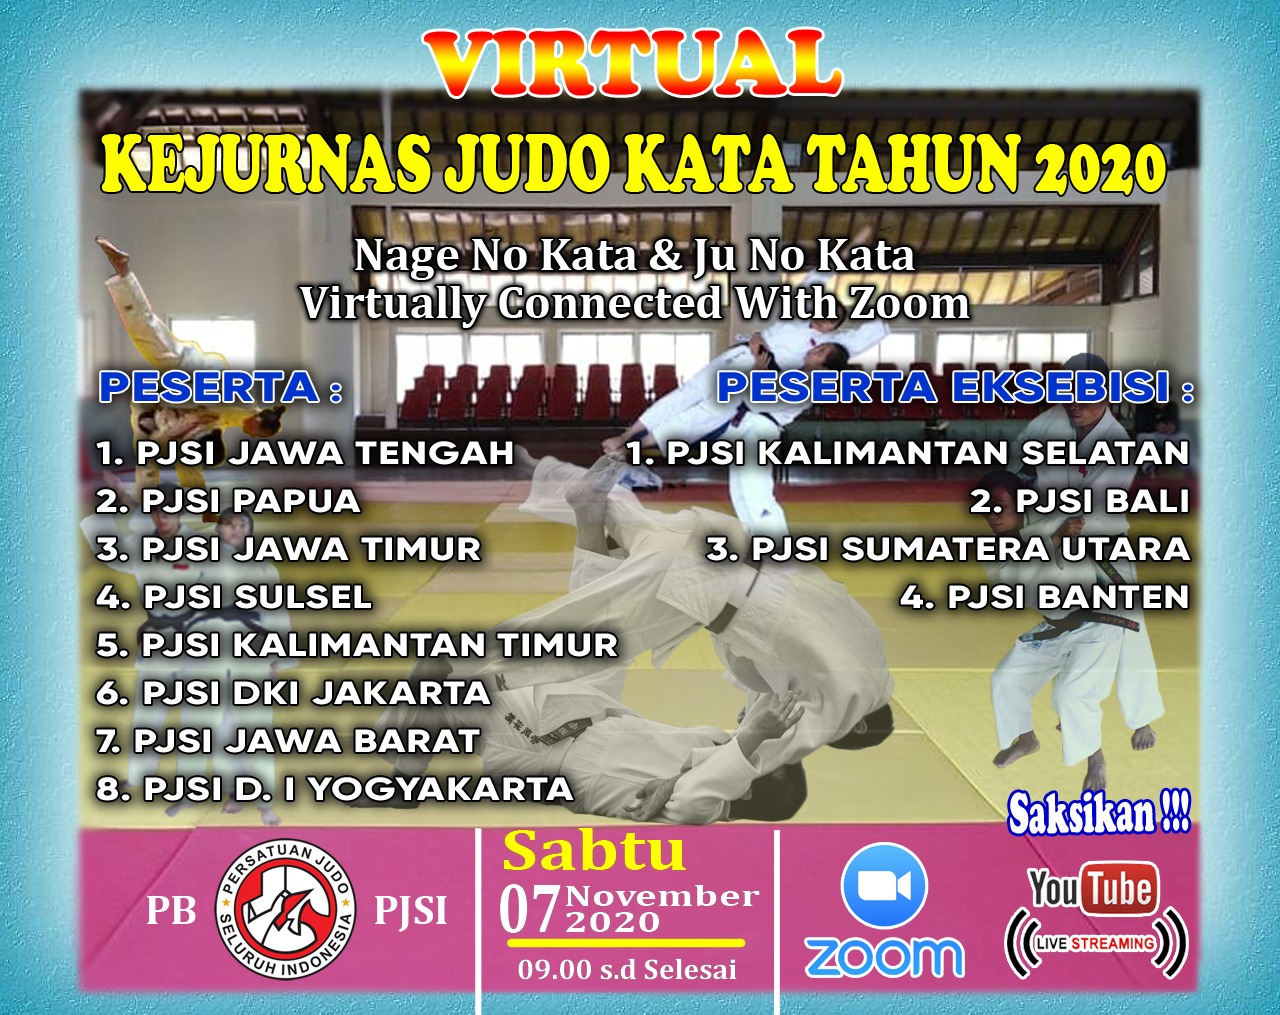 Jawa Timur dan Jawa Tengah Raih Gelar Juara di Kejurnas Judo Kata 2020